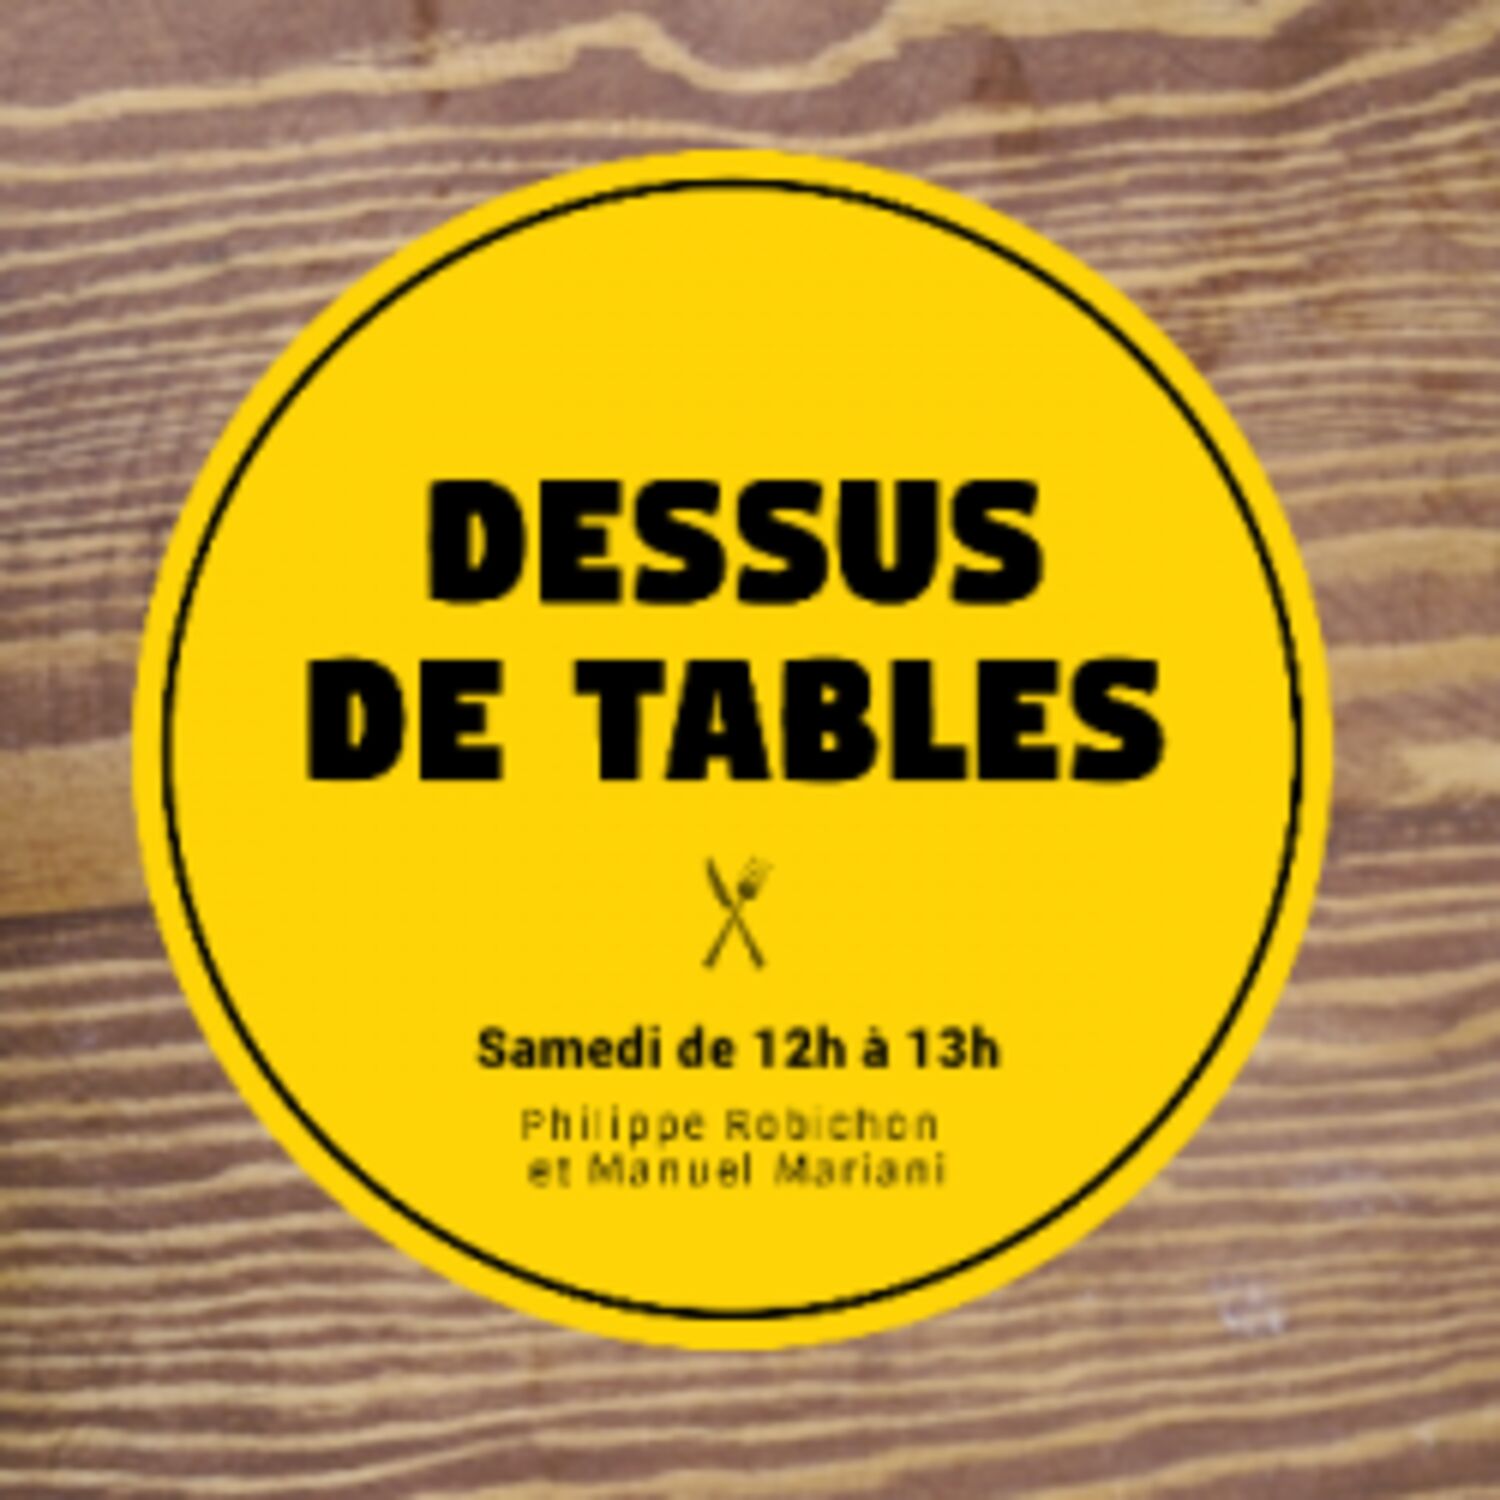 Dessus de tables 19-06-2021